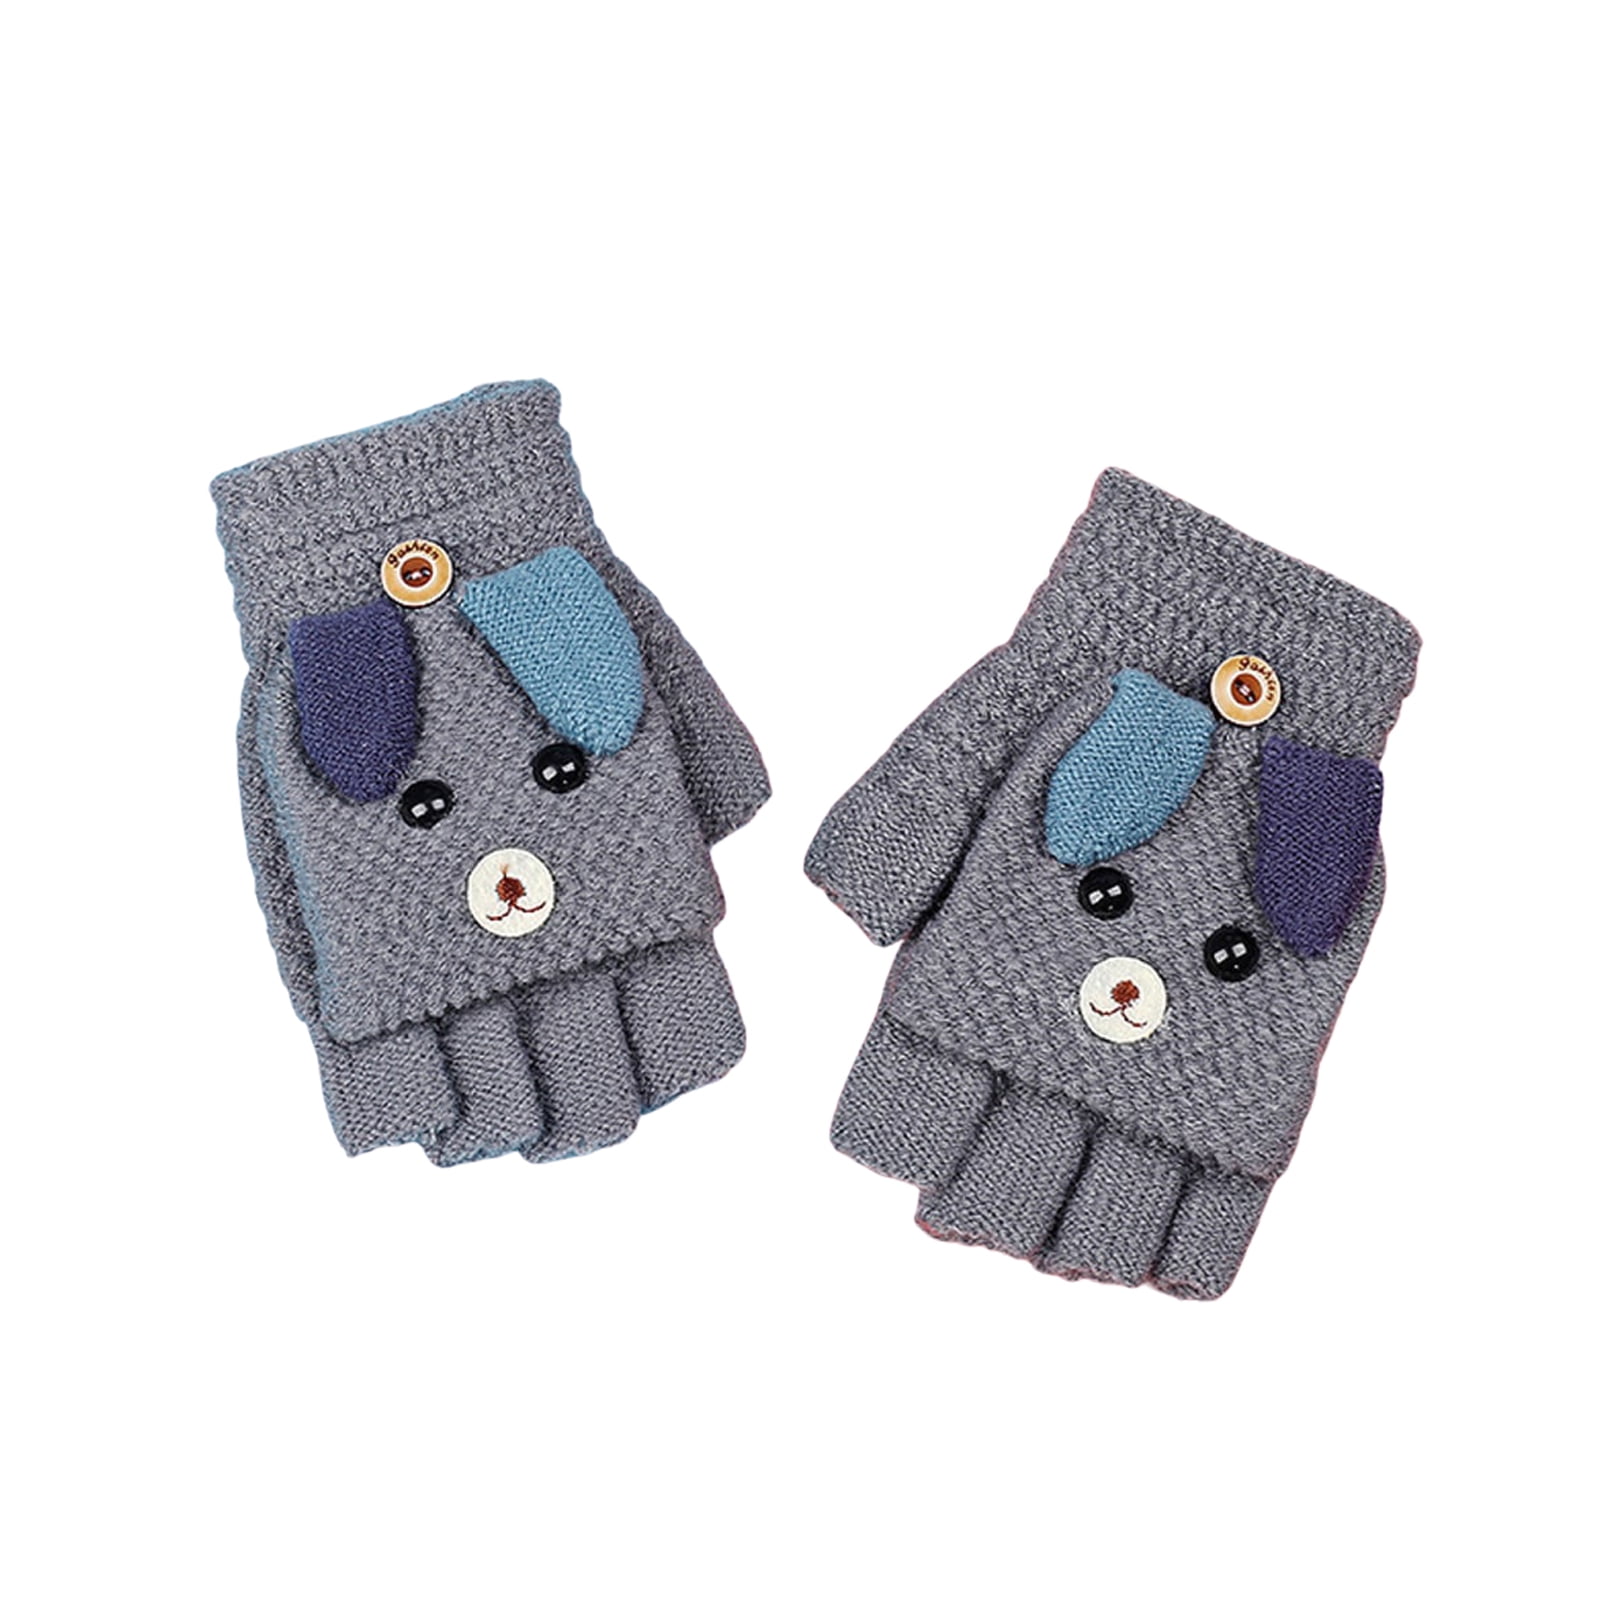 Kids Unicorn Flip Top Gloves with Mitten Cover Knitted Winter Fingerless Convertible Mittens for Boy Girls Toddler 